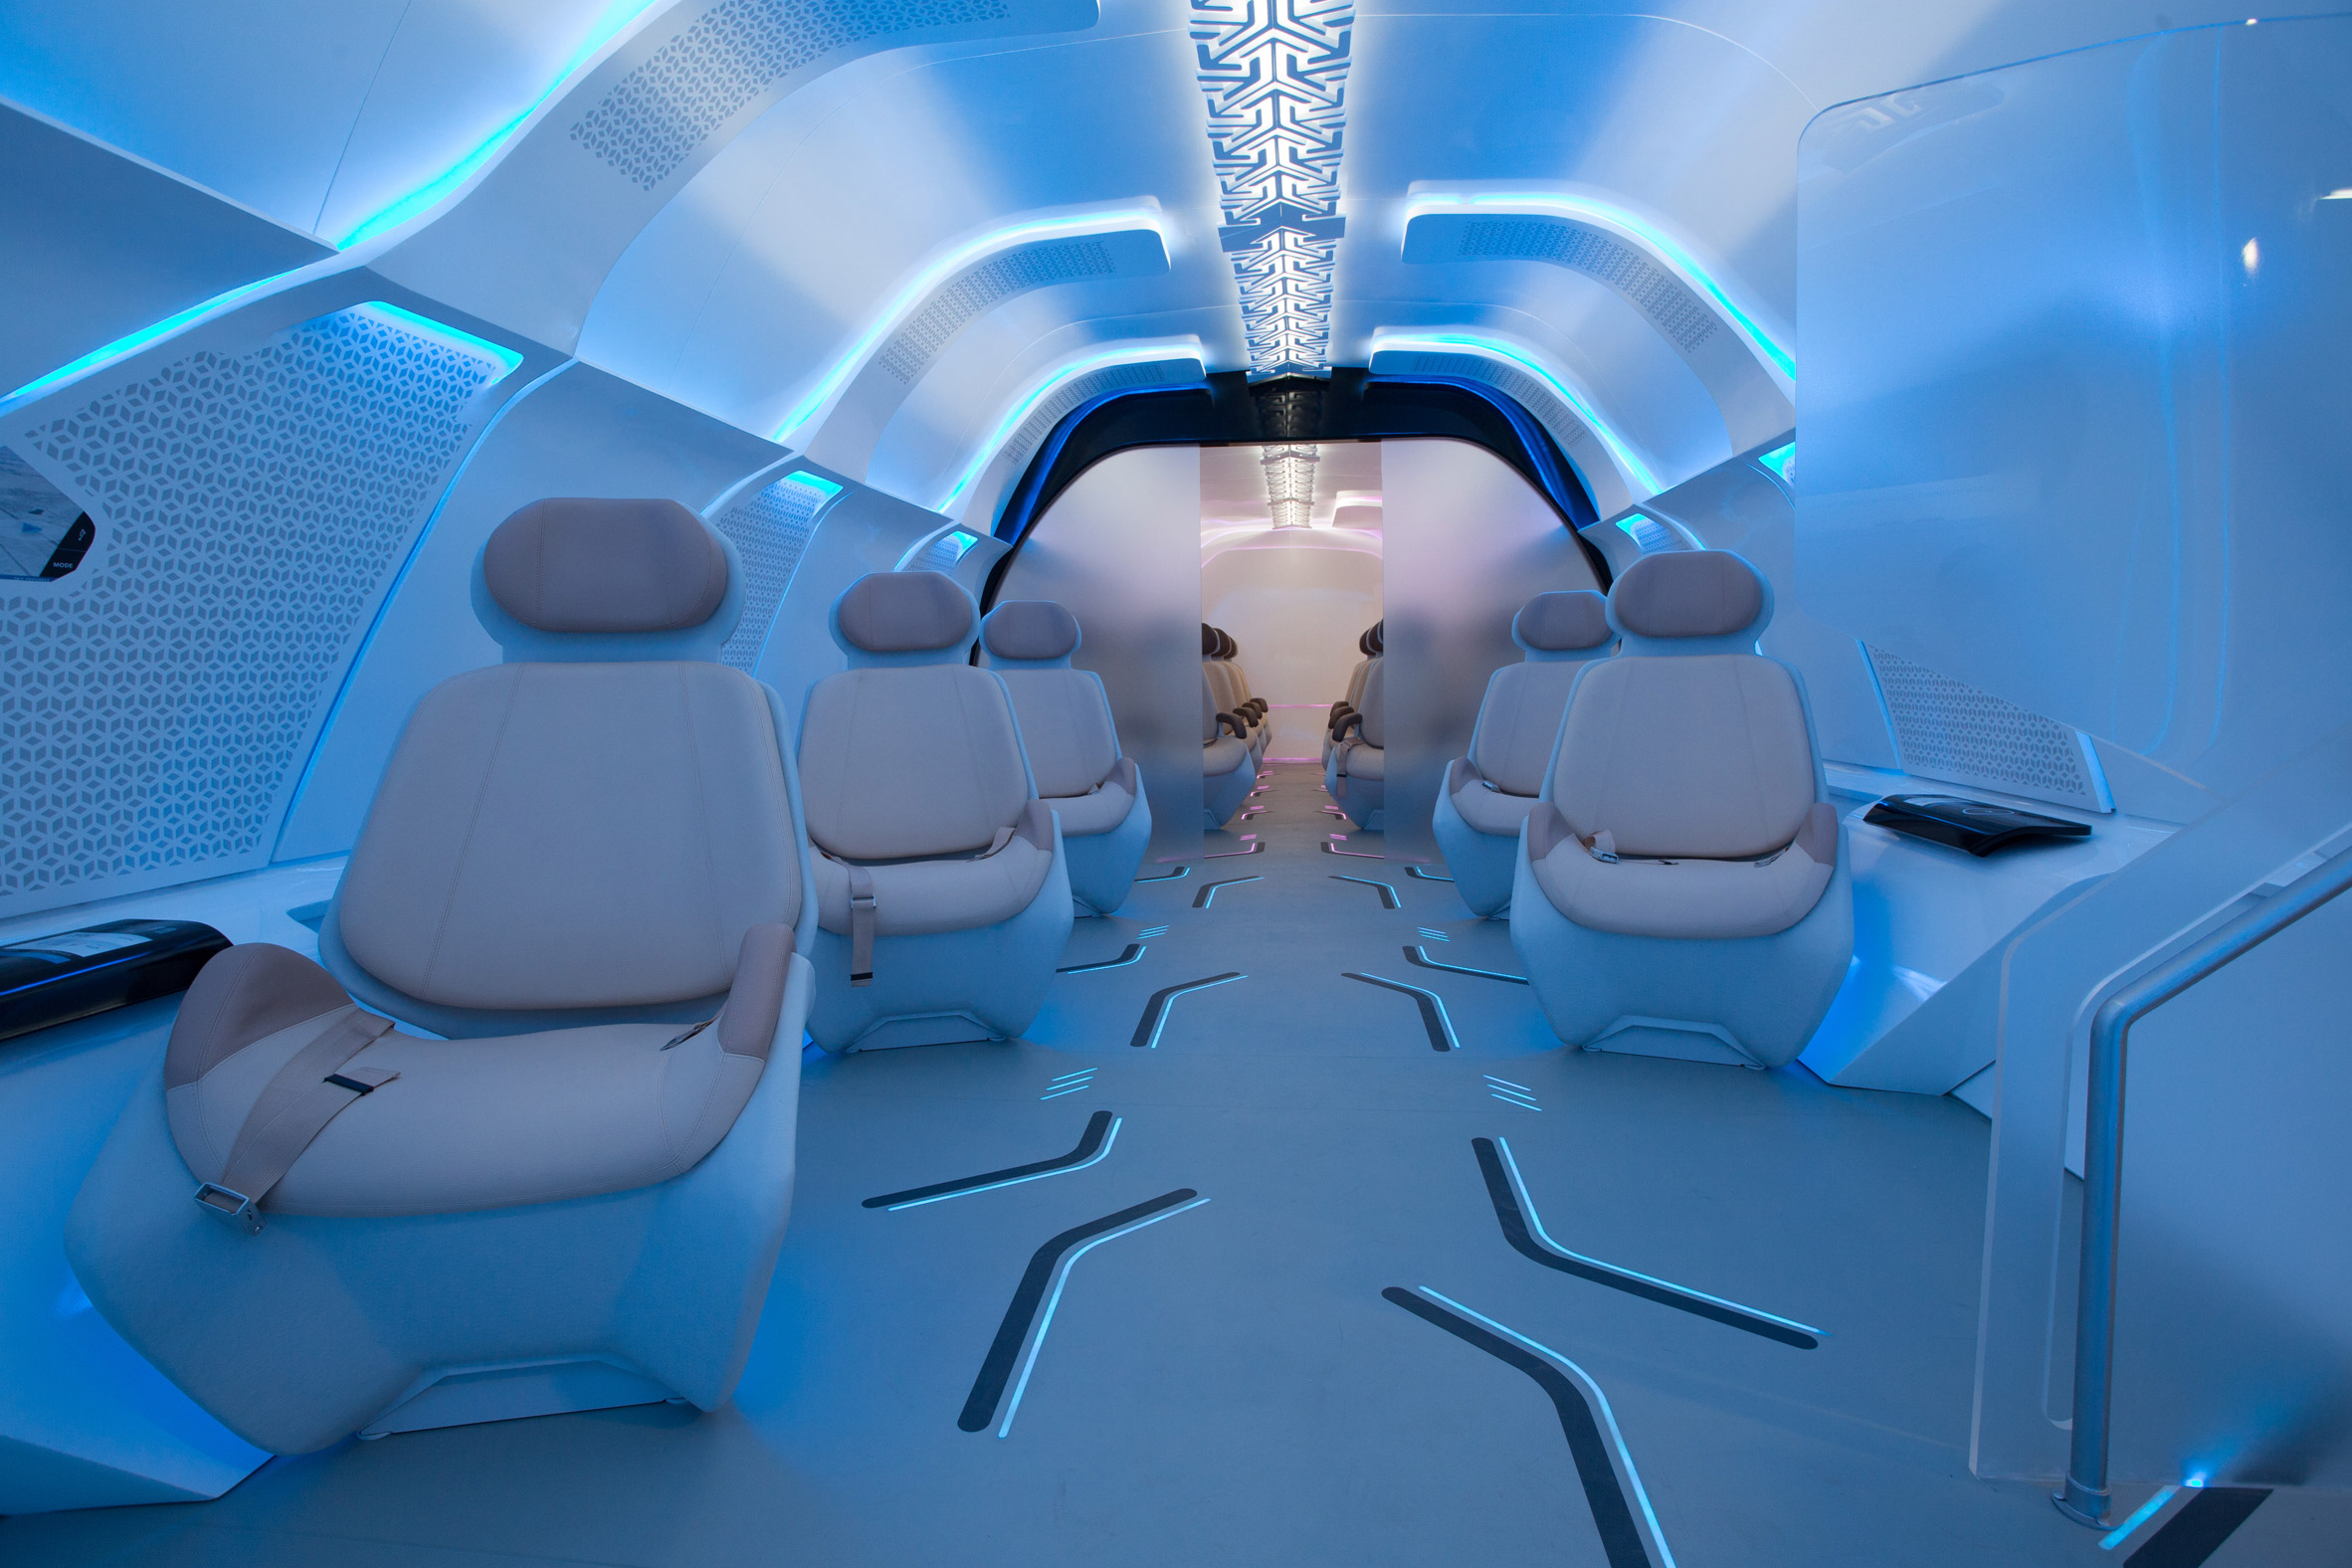 BMW designs "human-centric" Hyperloop One passenger sheathing for Dubai network